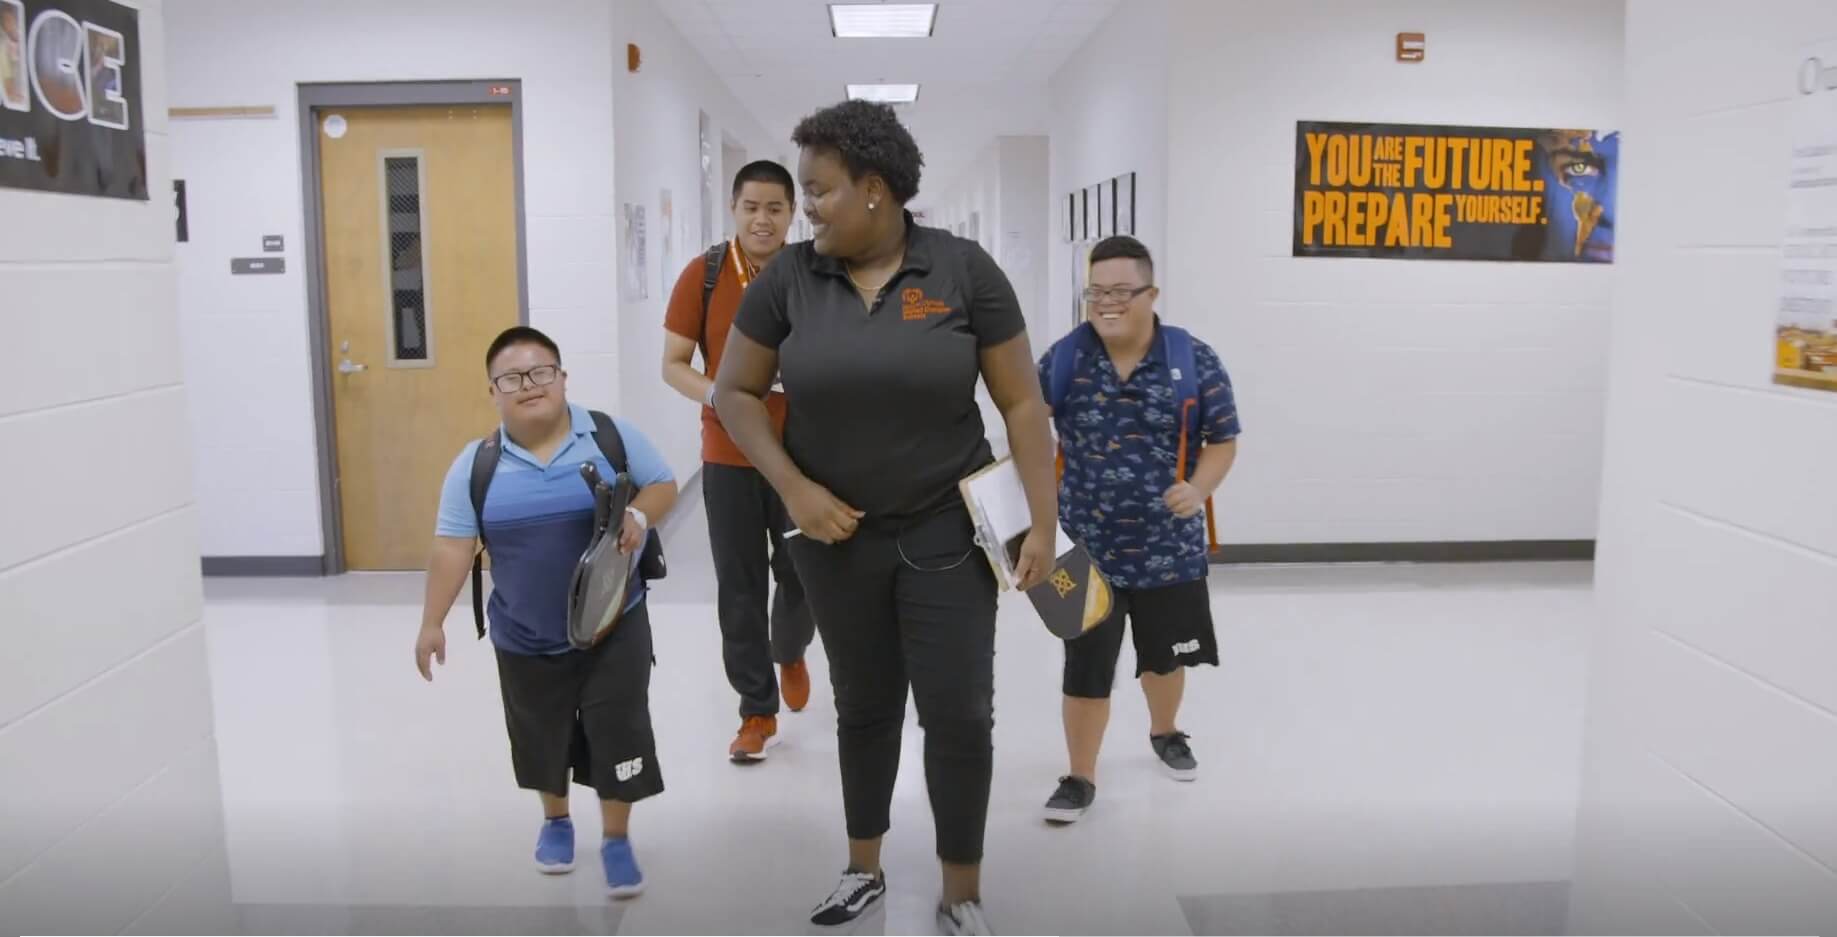 U.S. Youth Ambassador Tajha walks the halls of her high school with fellow students.